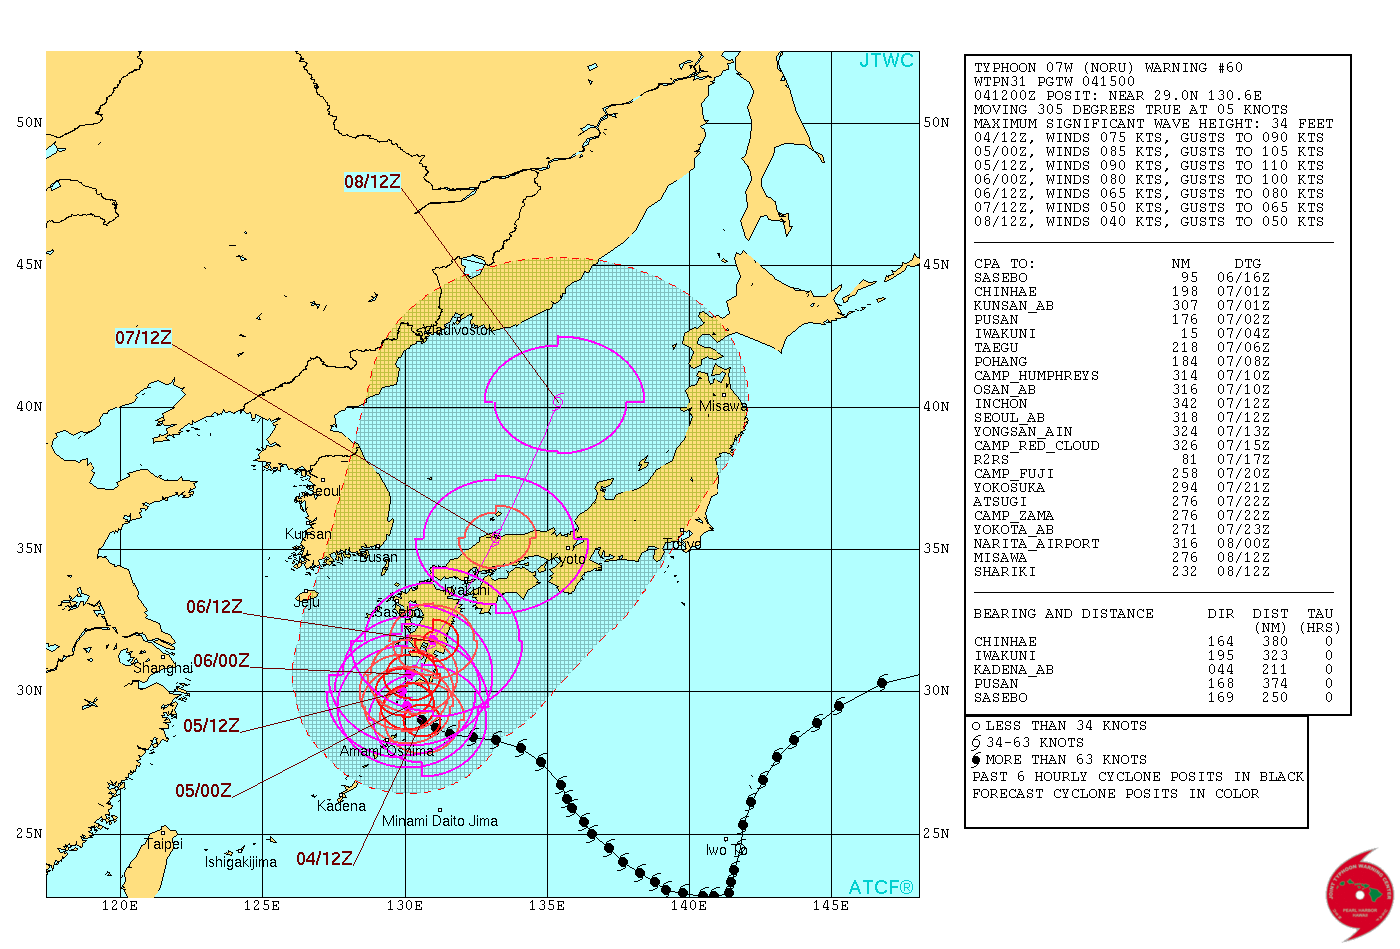 Typhoon Noru forecast track by JTWC on August 4, 2017